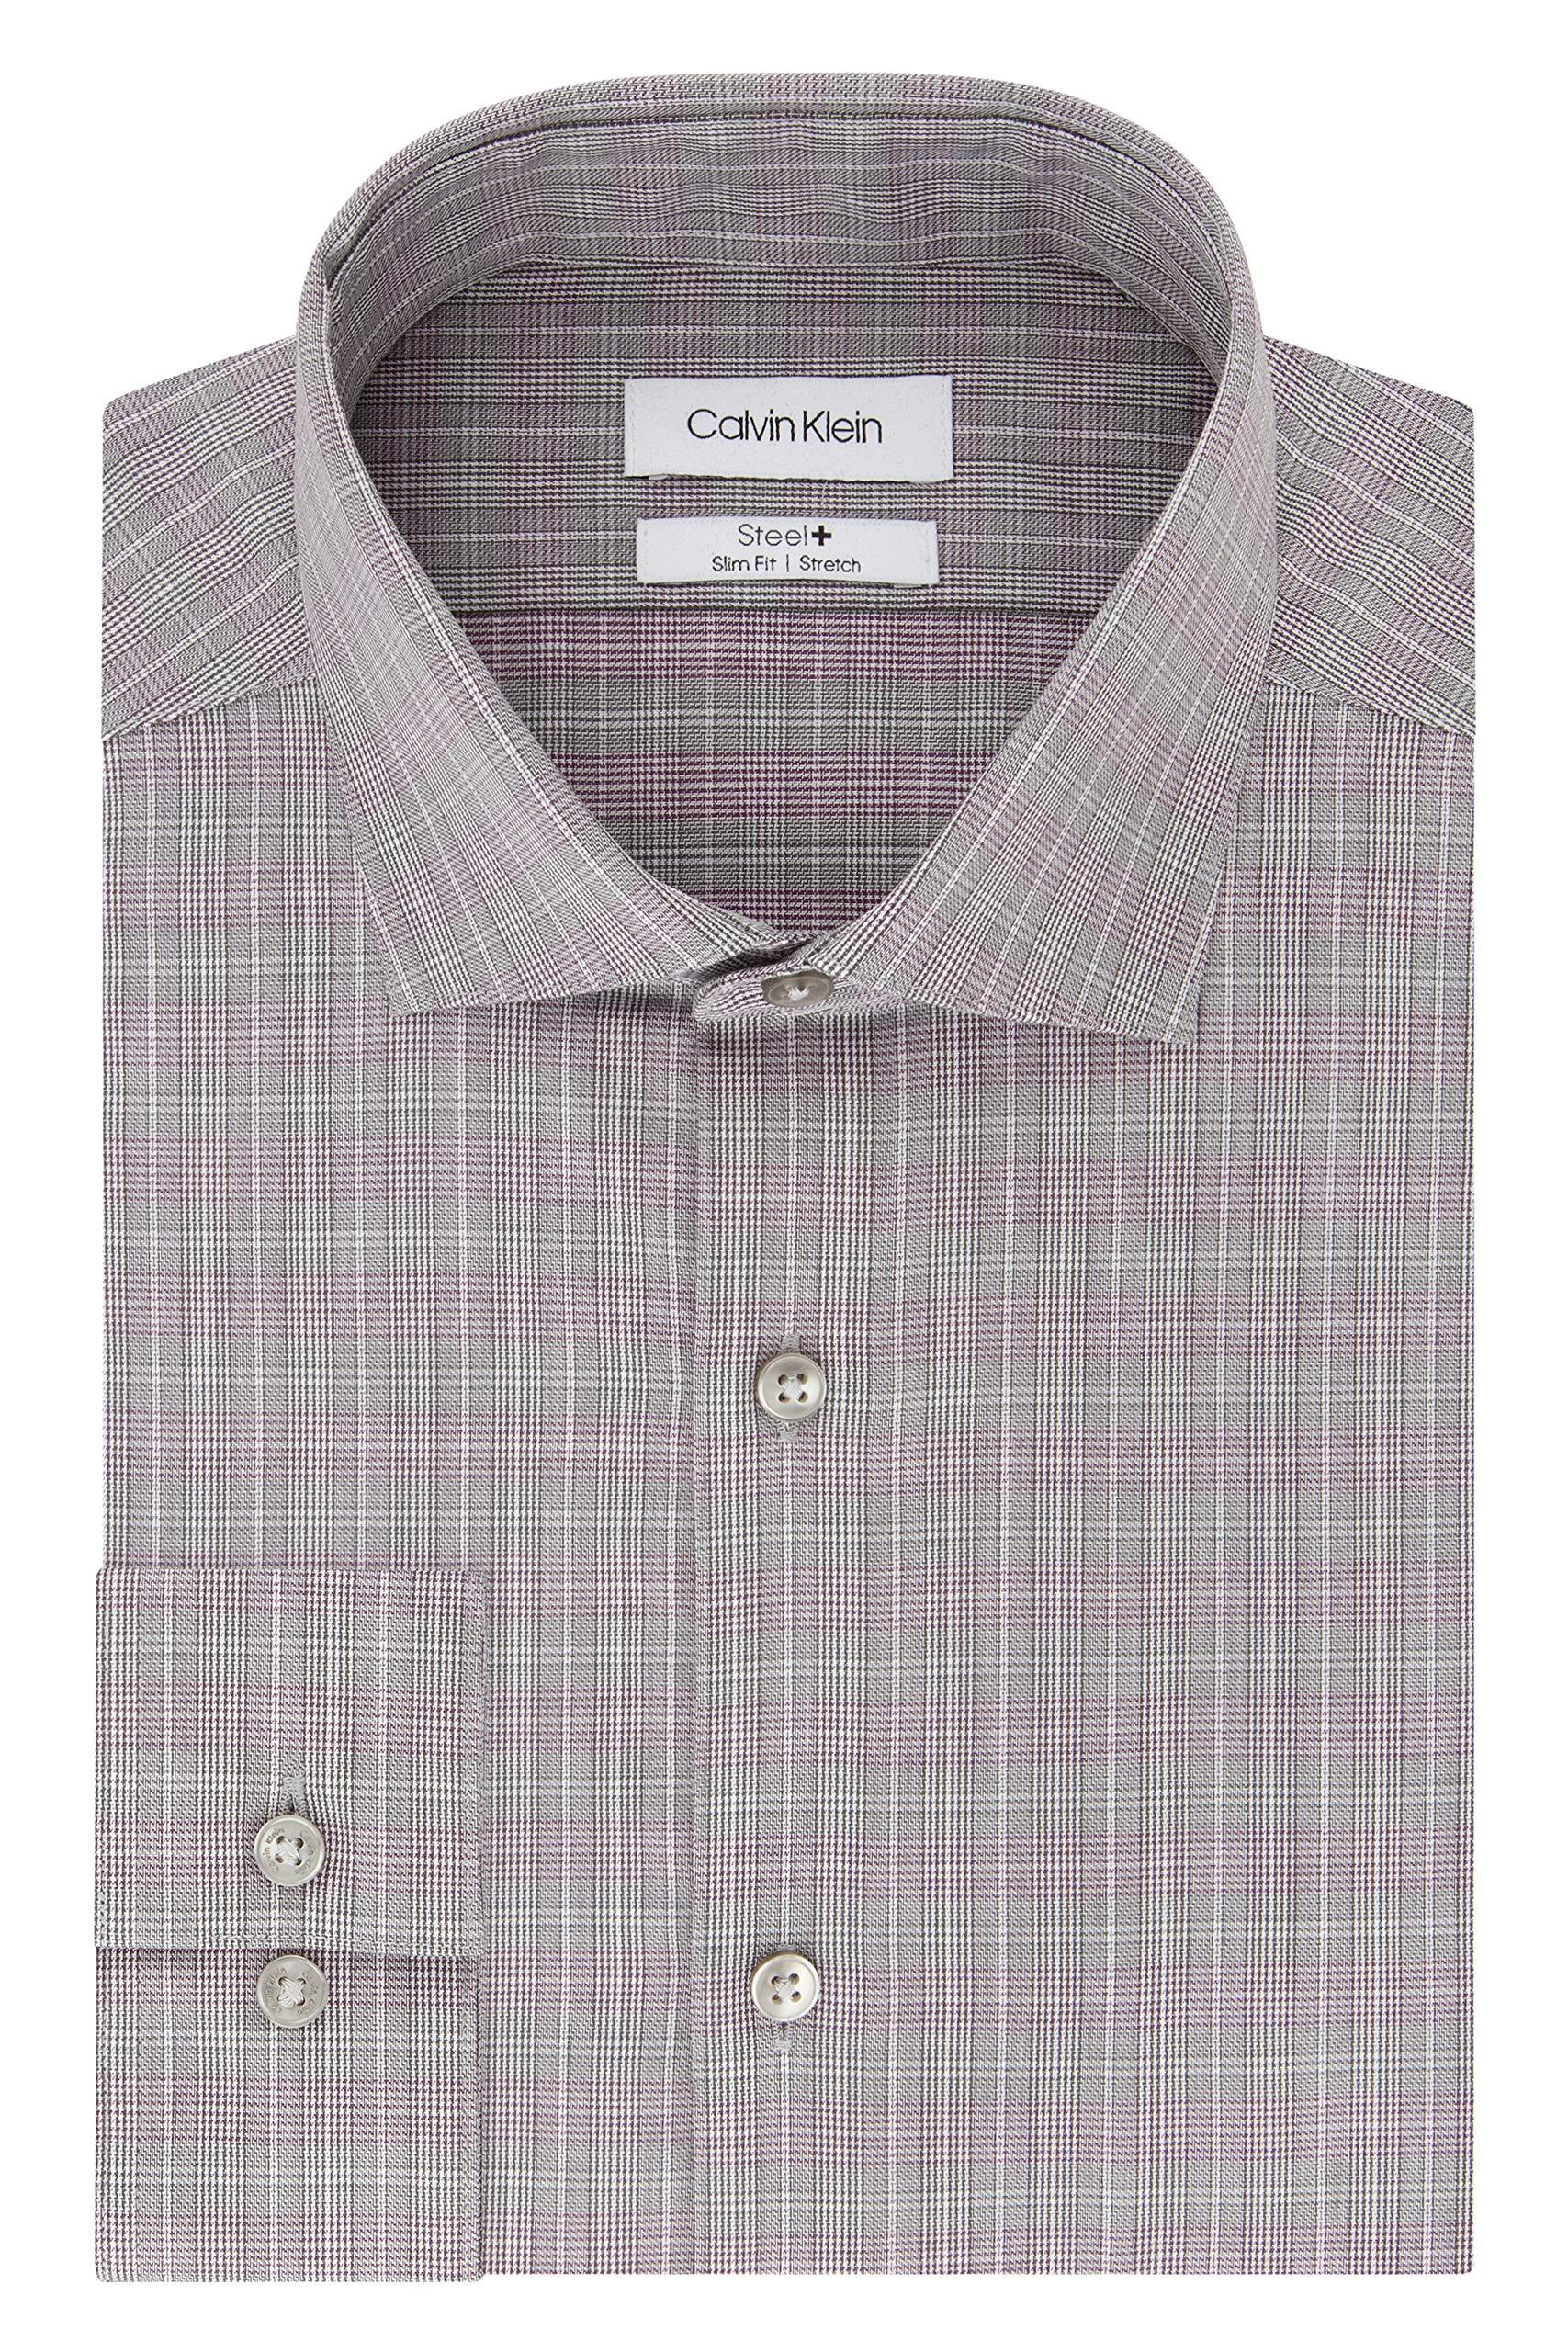 Calvin Klein Cotton Slim-fit Check Dress Shirt in Purple for Men - Save ...